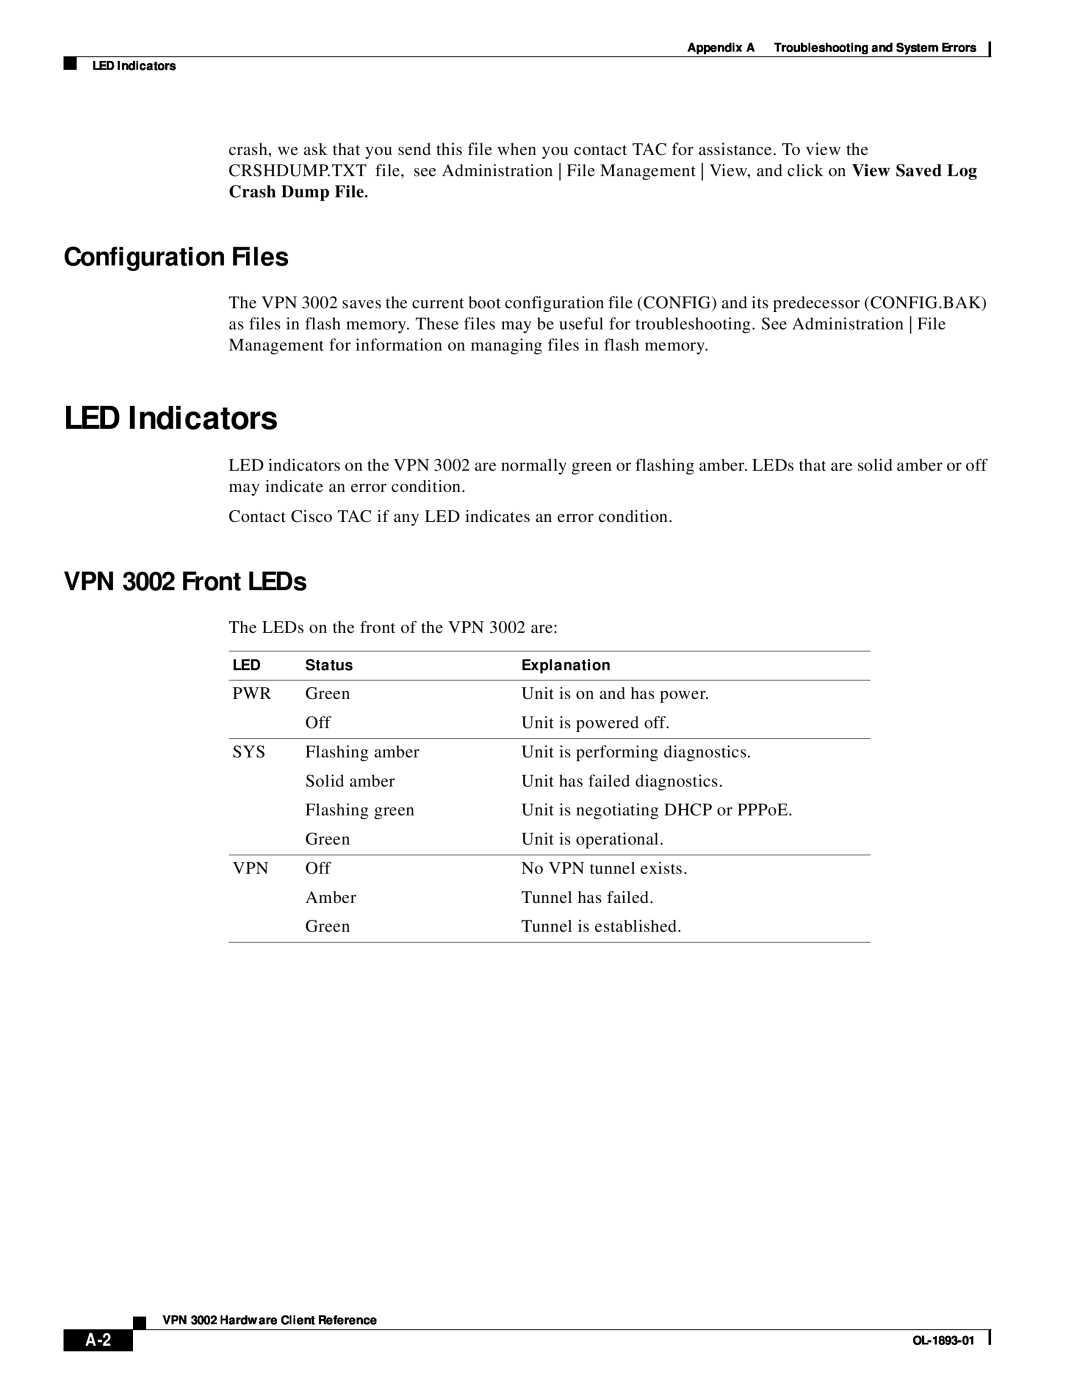 Cisco Systems manual LED Indicators, Configuration Files, VPN 3002 Front LEDs, Crash Dump File, Status, Explanation 